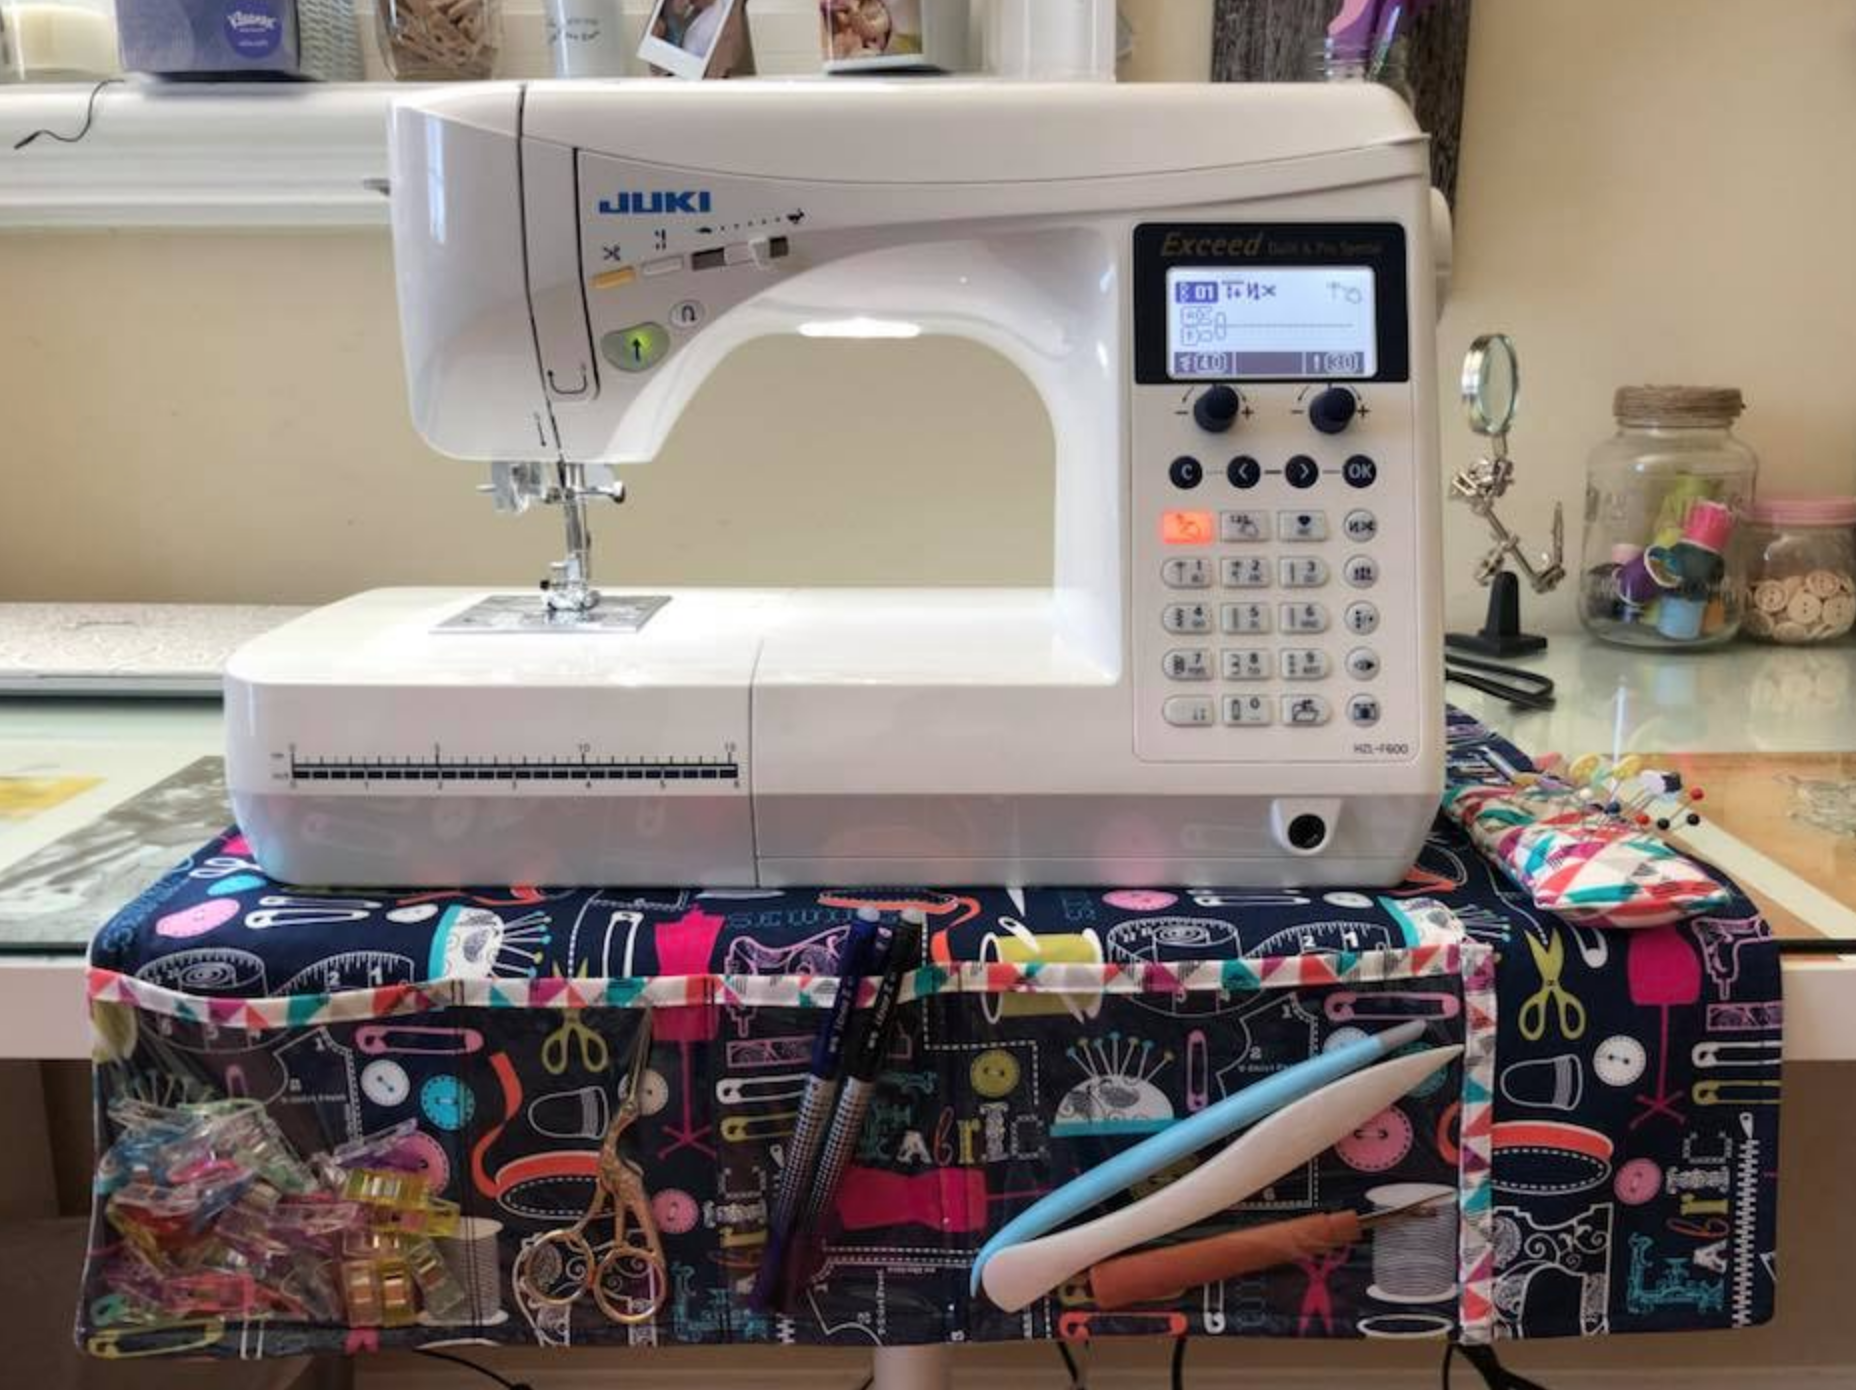 Sewing Machine Mat/Organizer - click here